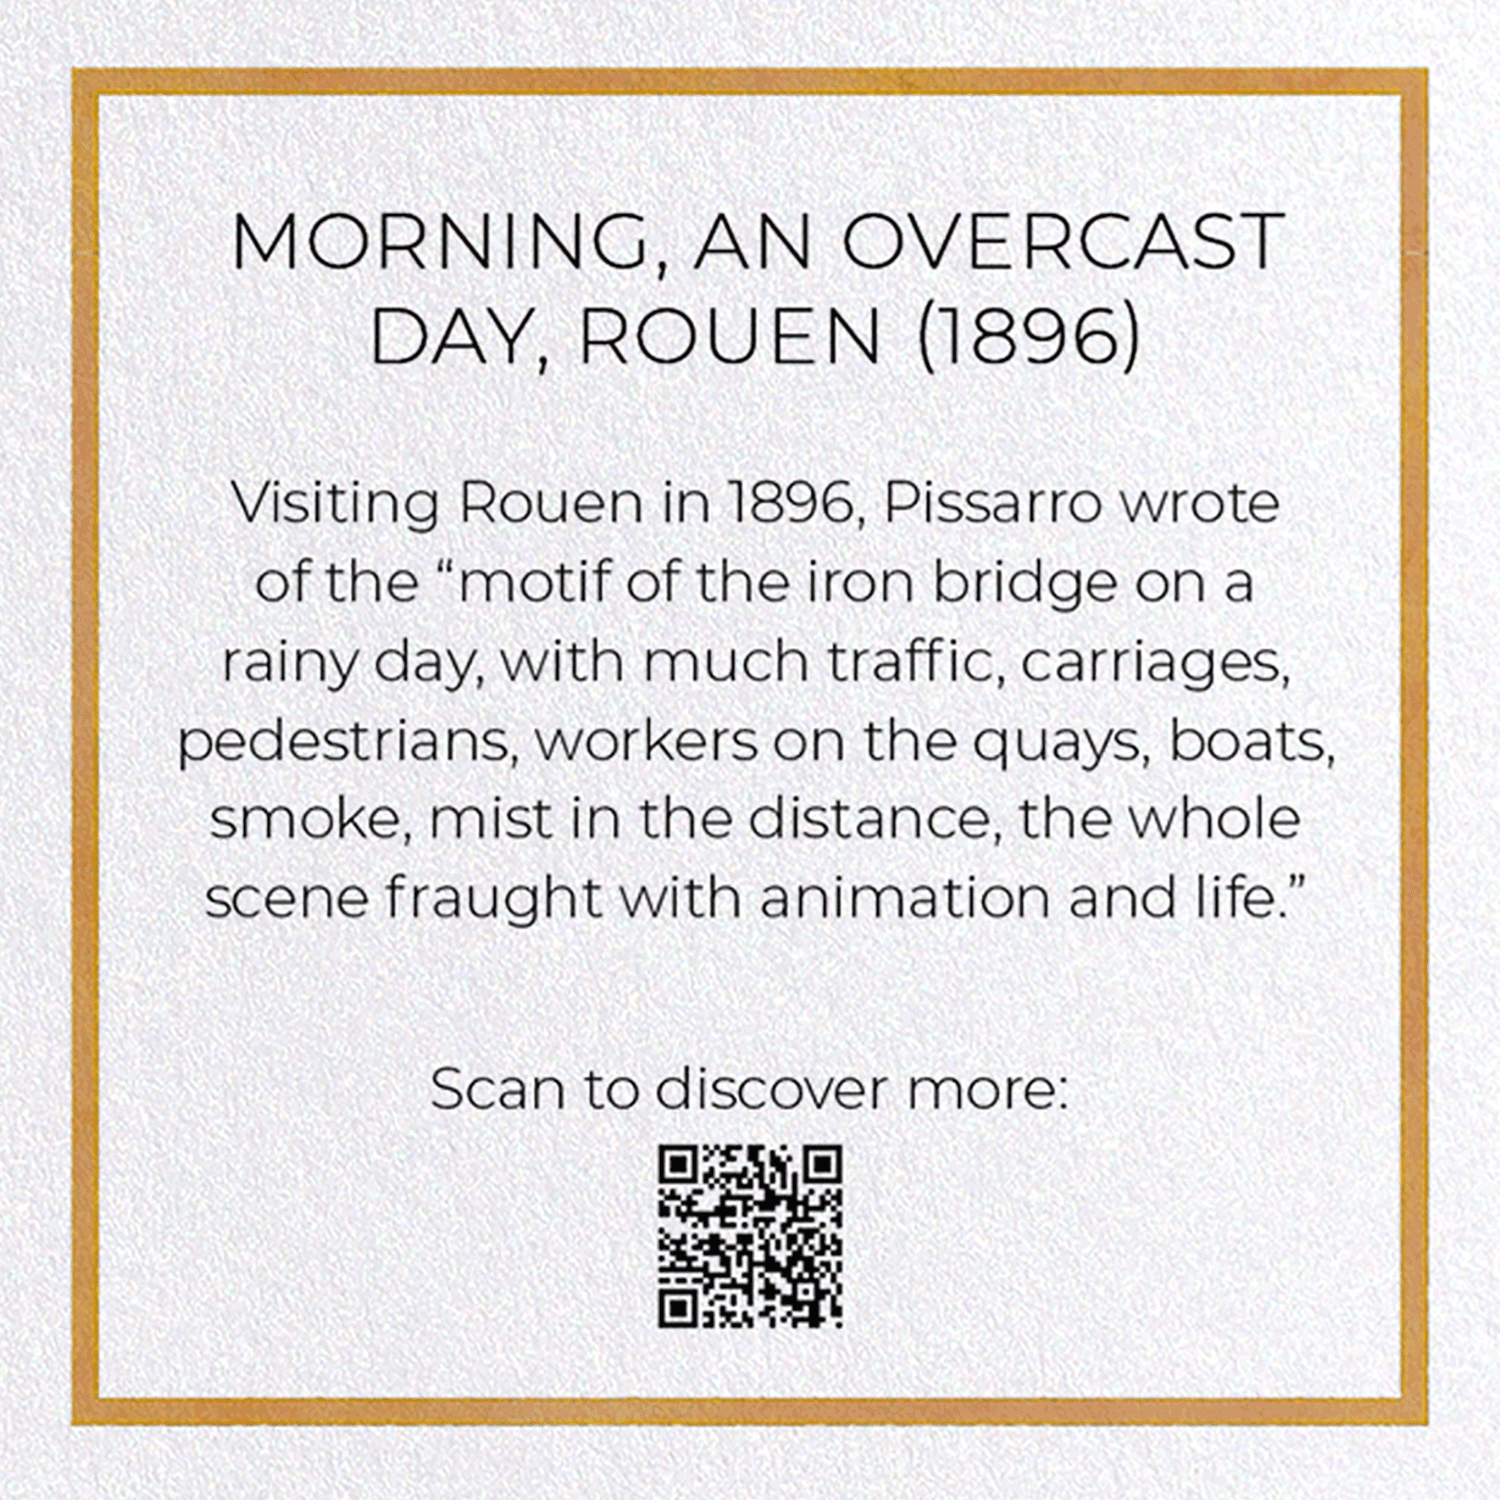 MORNING, AN OVERCAST DAY, ROUEN (1896)